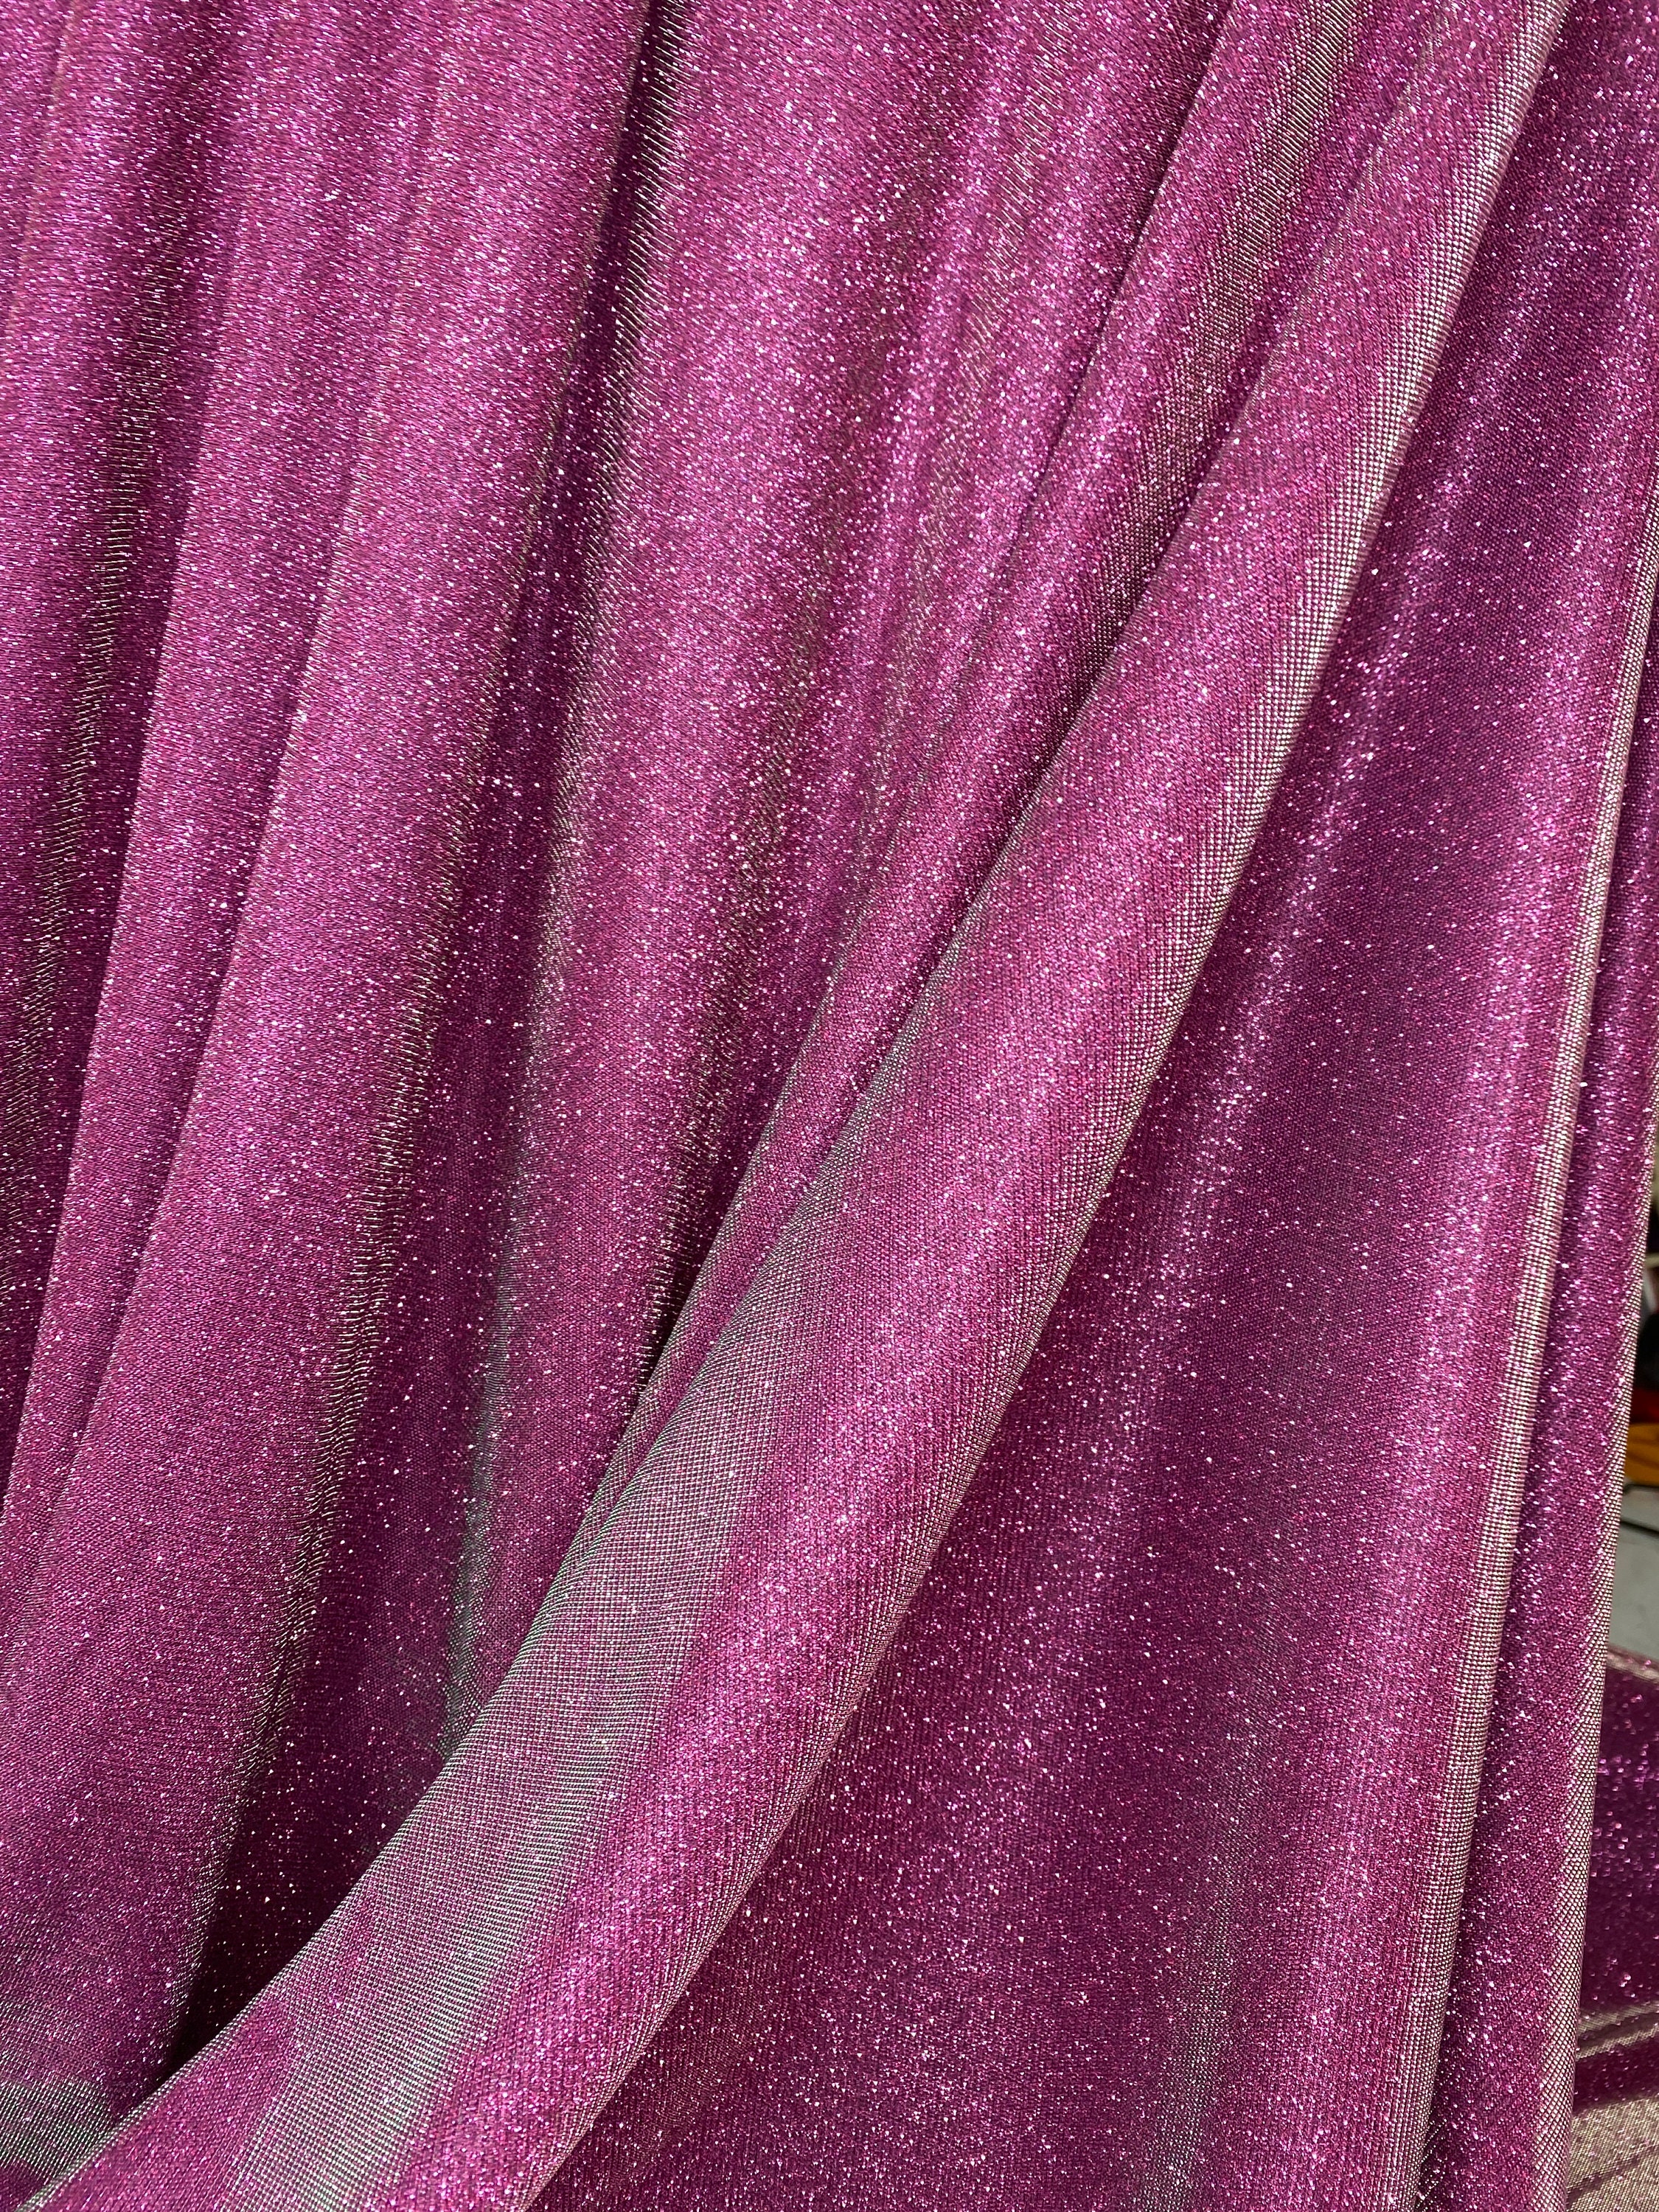 Hot Pink Glitter – EdenElle Fabric